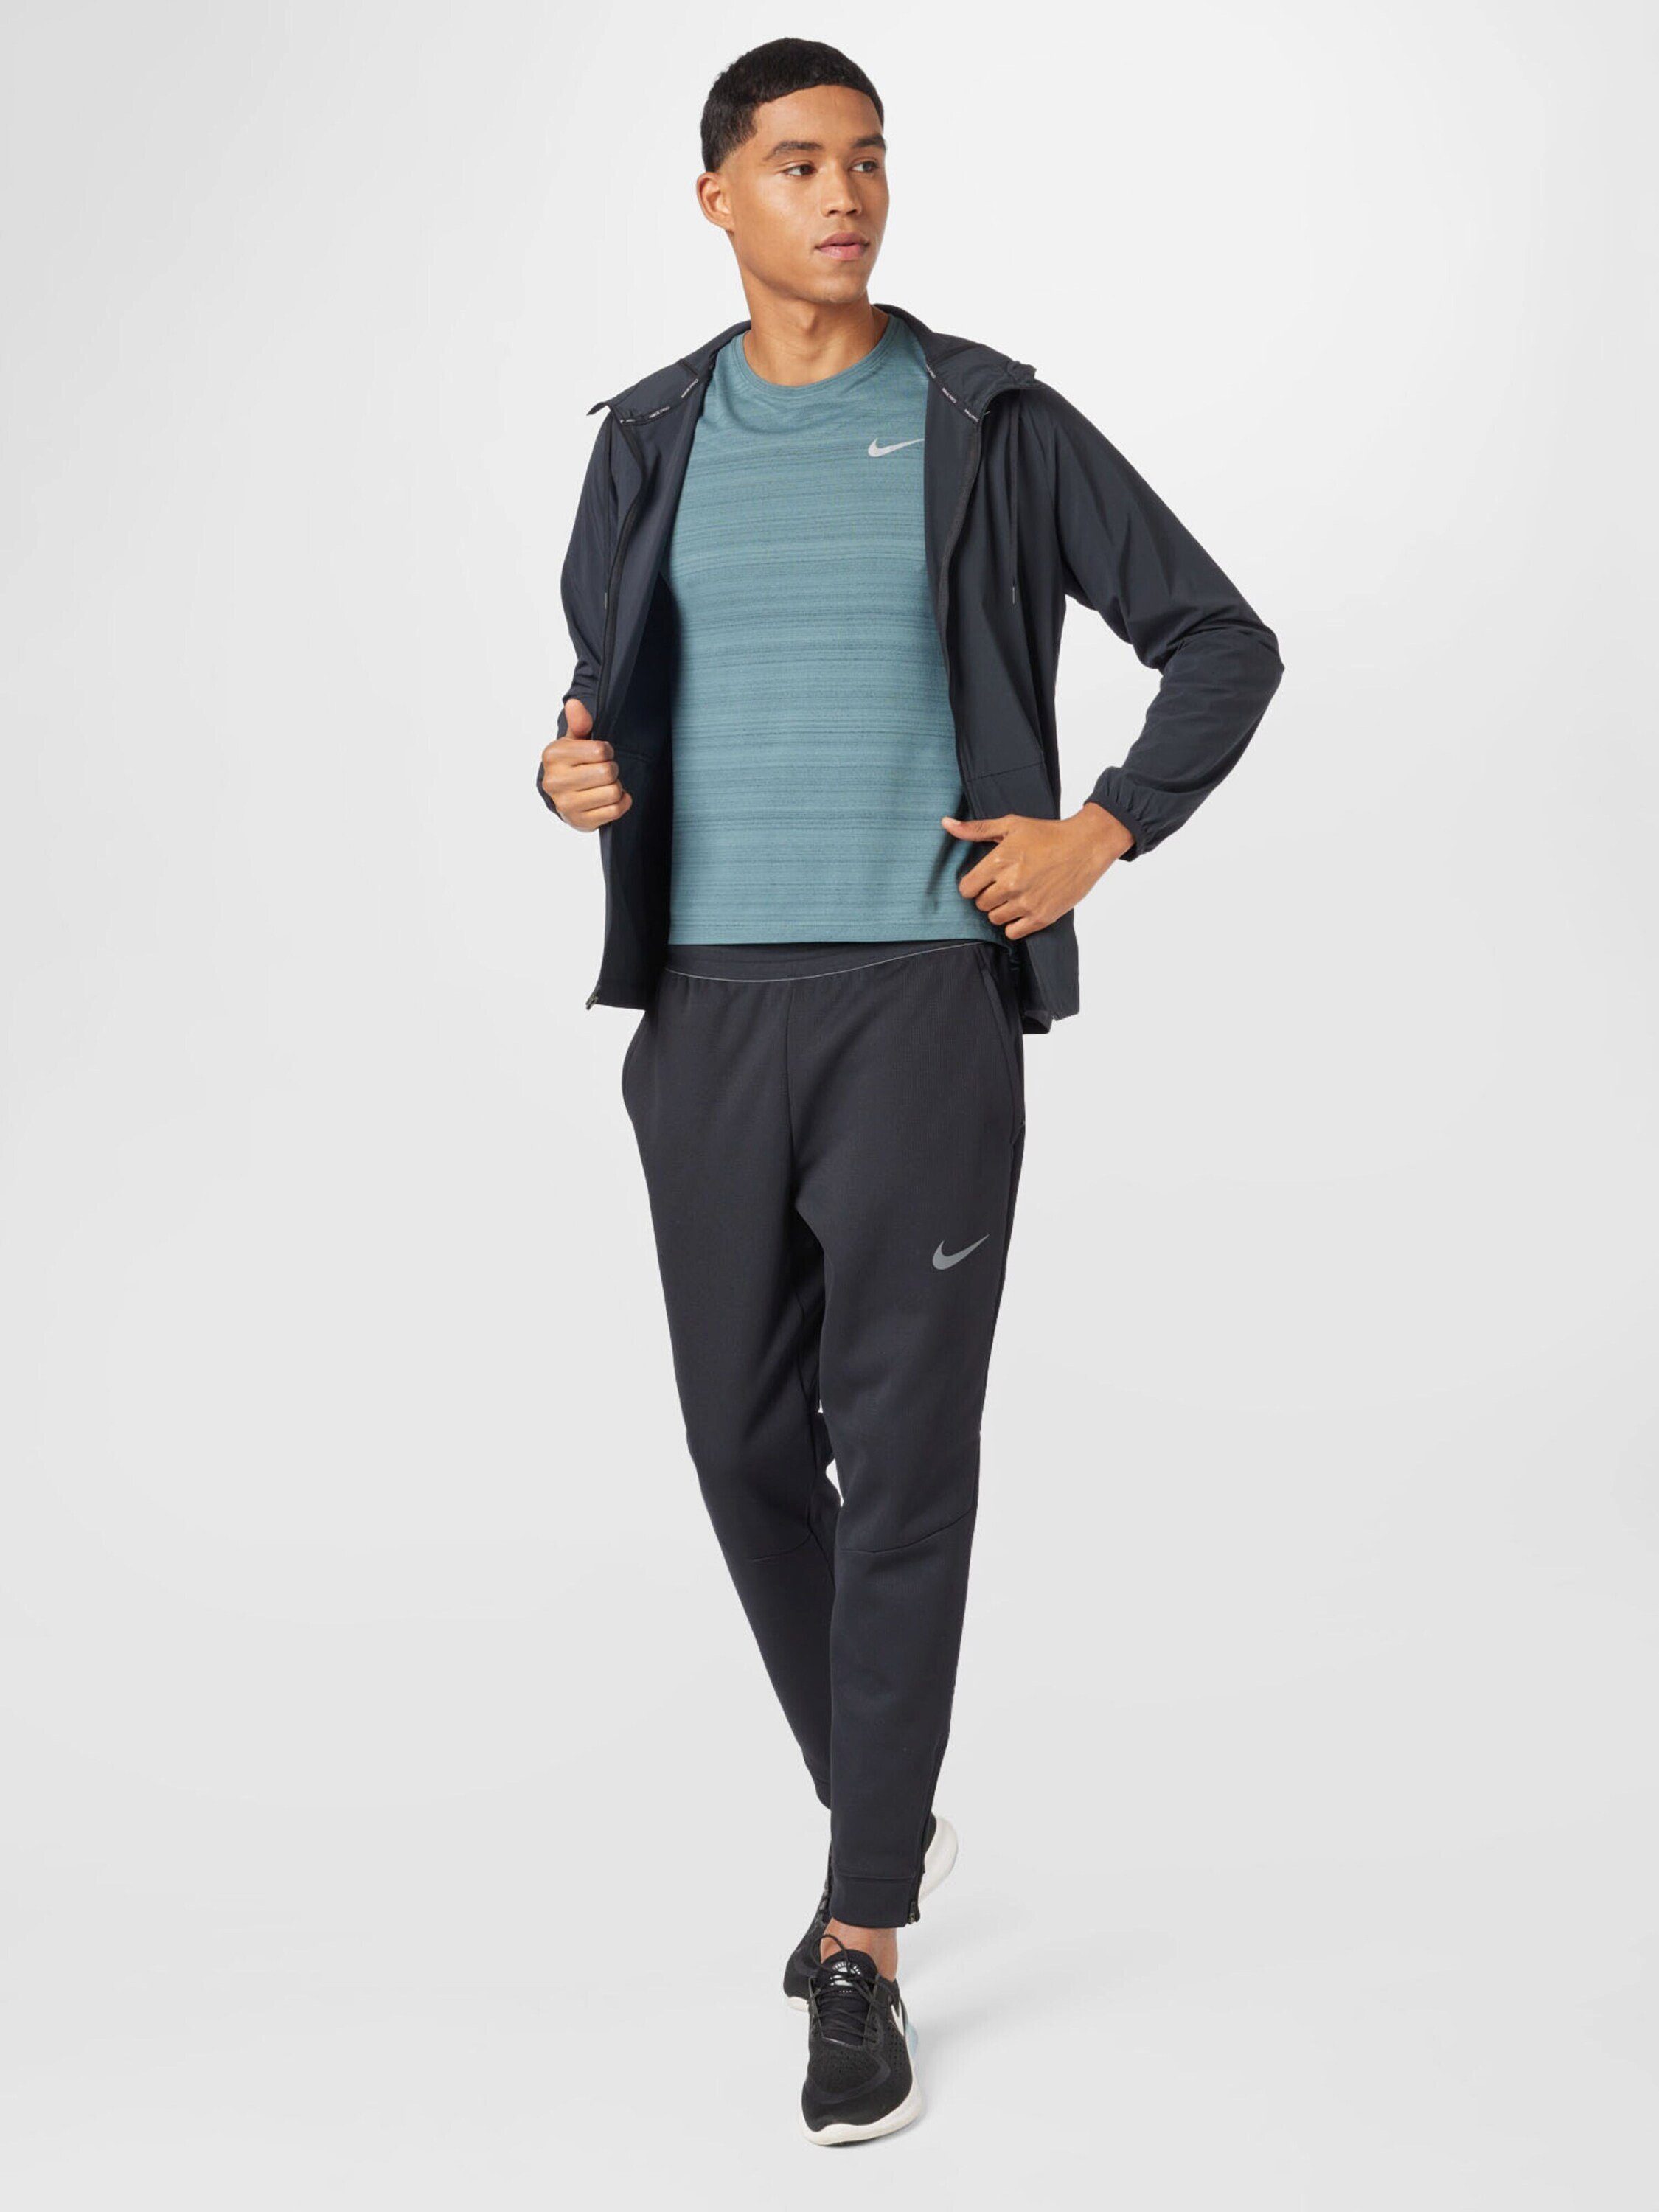 Plain/ohne Nike Vent Trainingsjacke Details Max (1-St) Flex